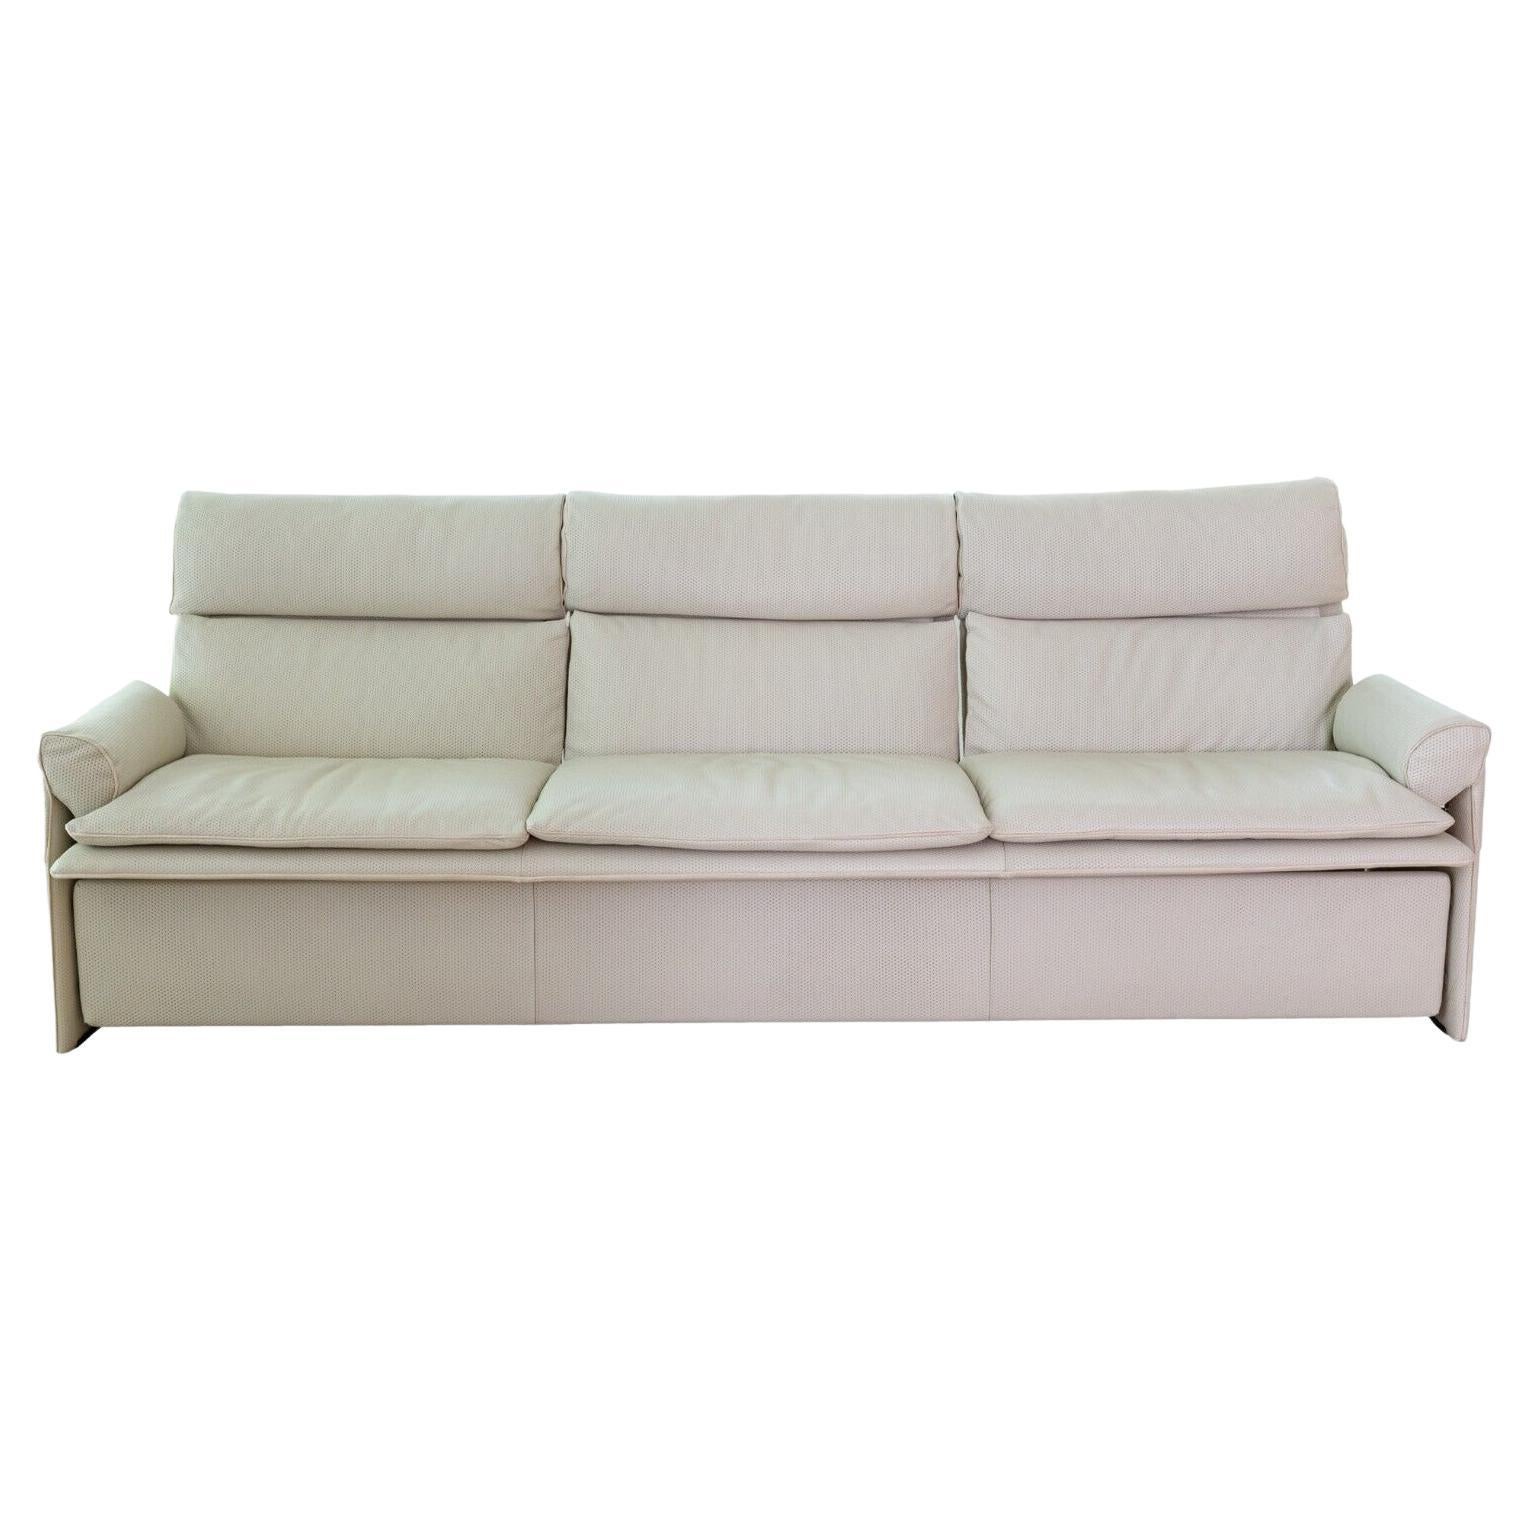 Contemporary Modern Saporiti Perforated Leather Dove Grey Sofa